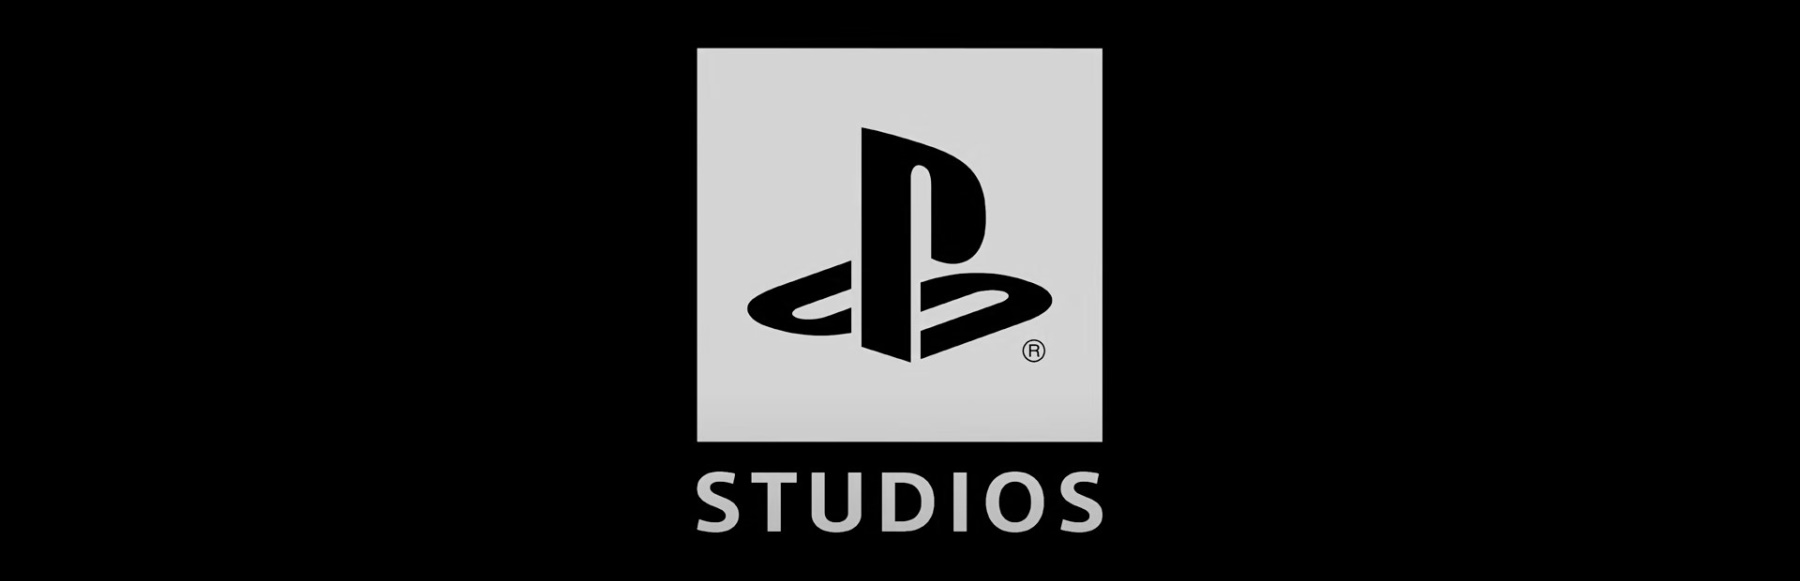 PlayStation Studios [ANA KONU]